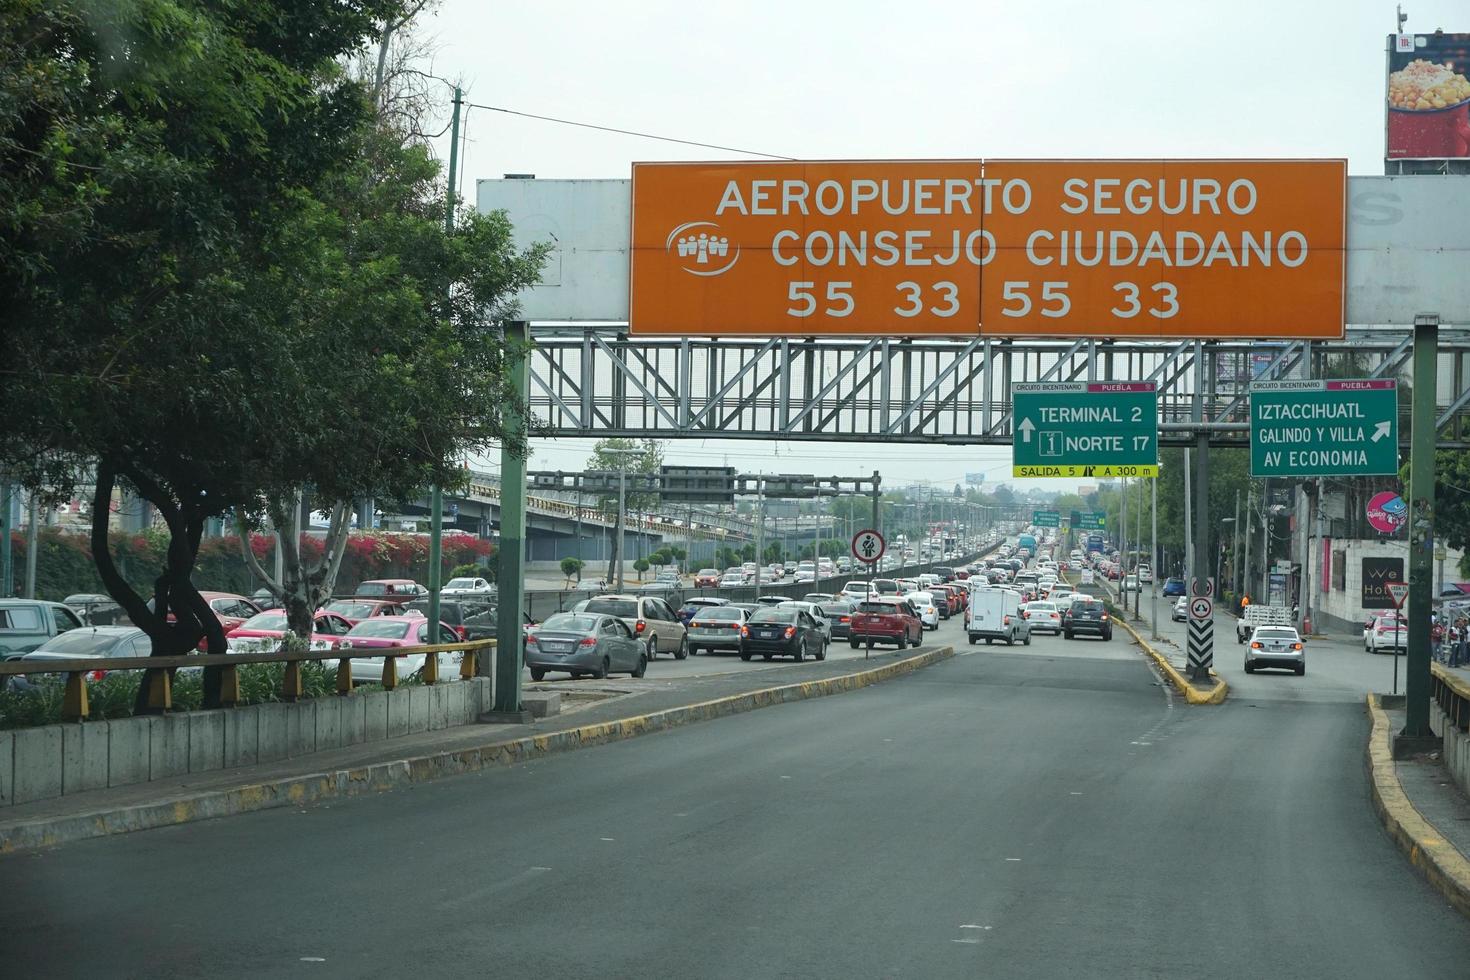 mexico stad, mexico - Mars 18 2018 - mexikansk metropol huvudstad belastad trafik foto